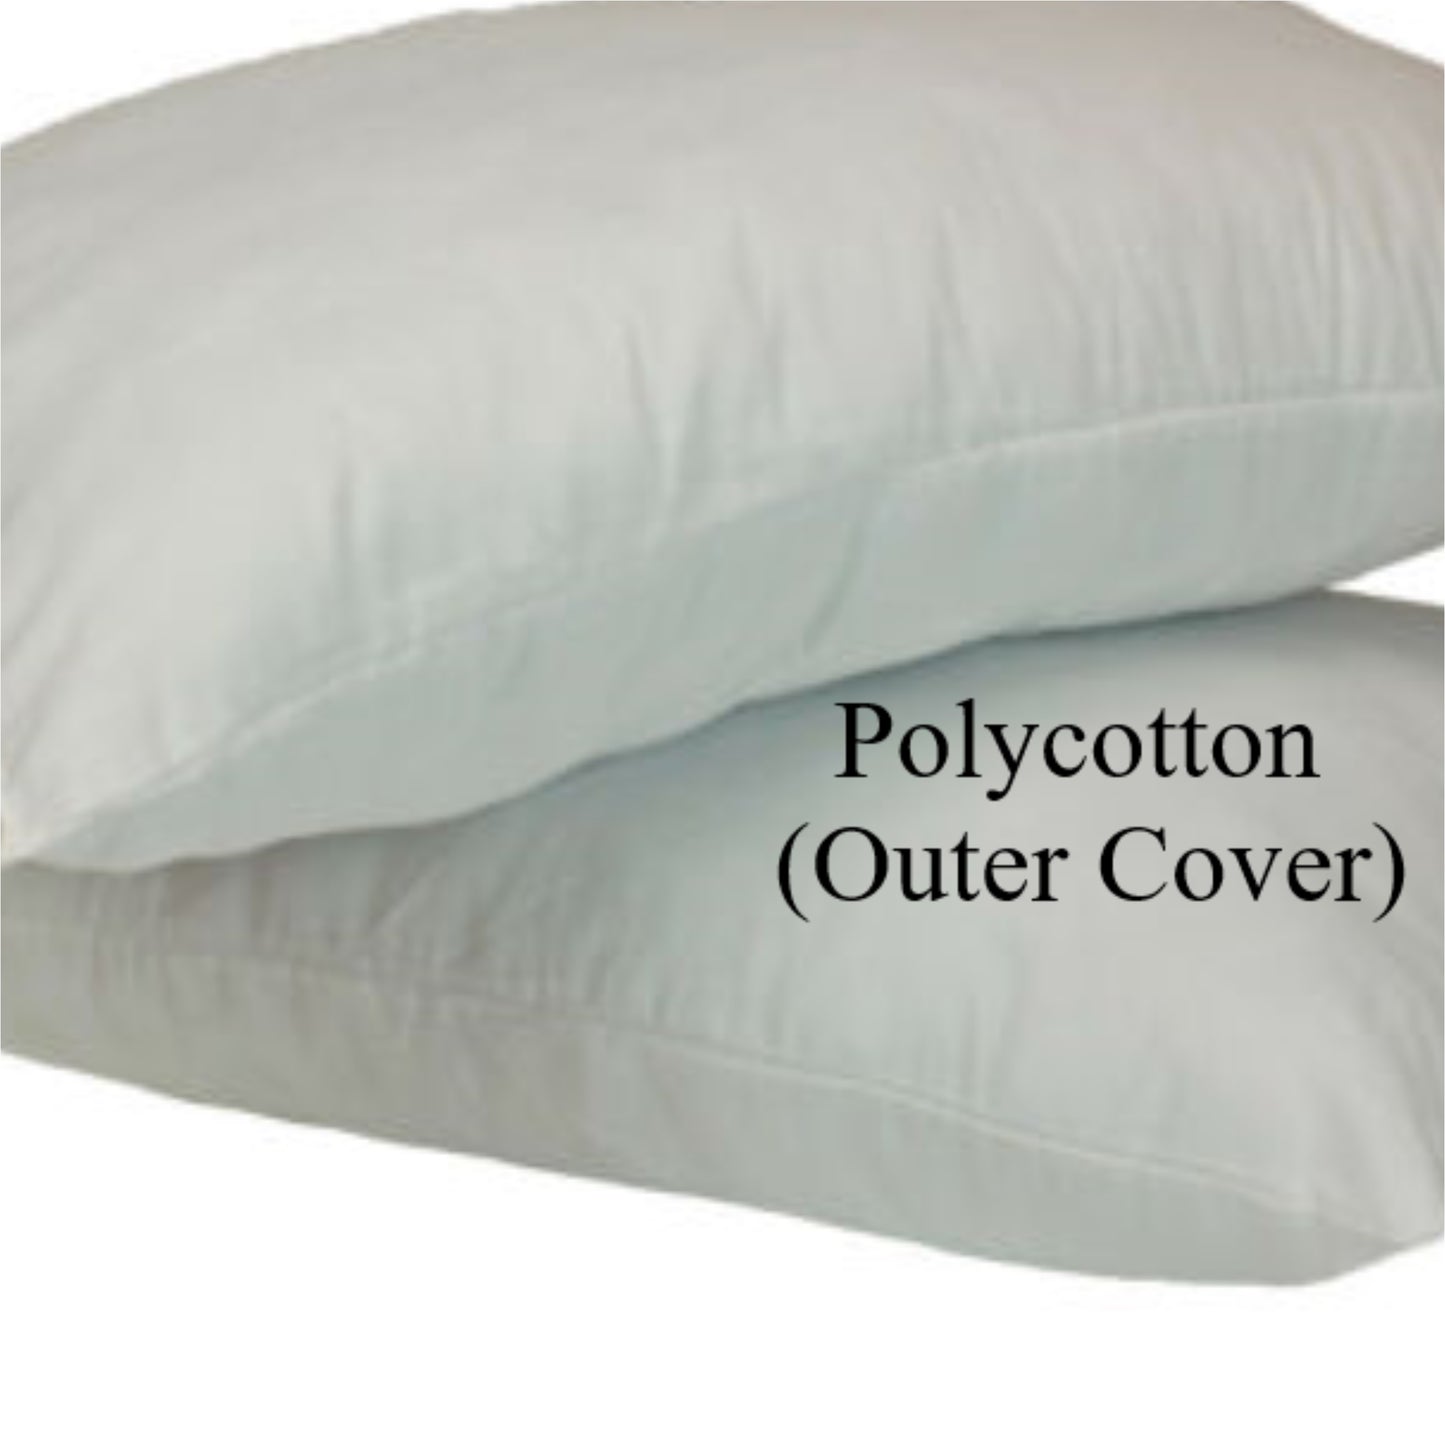 Extra Filled Bounce Back Hollow Fibre Pillows Hotel Quailty Plump Pillows